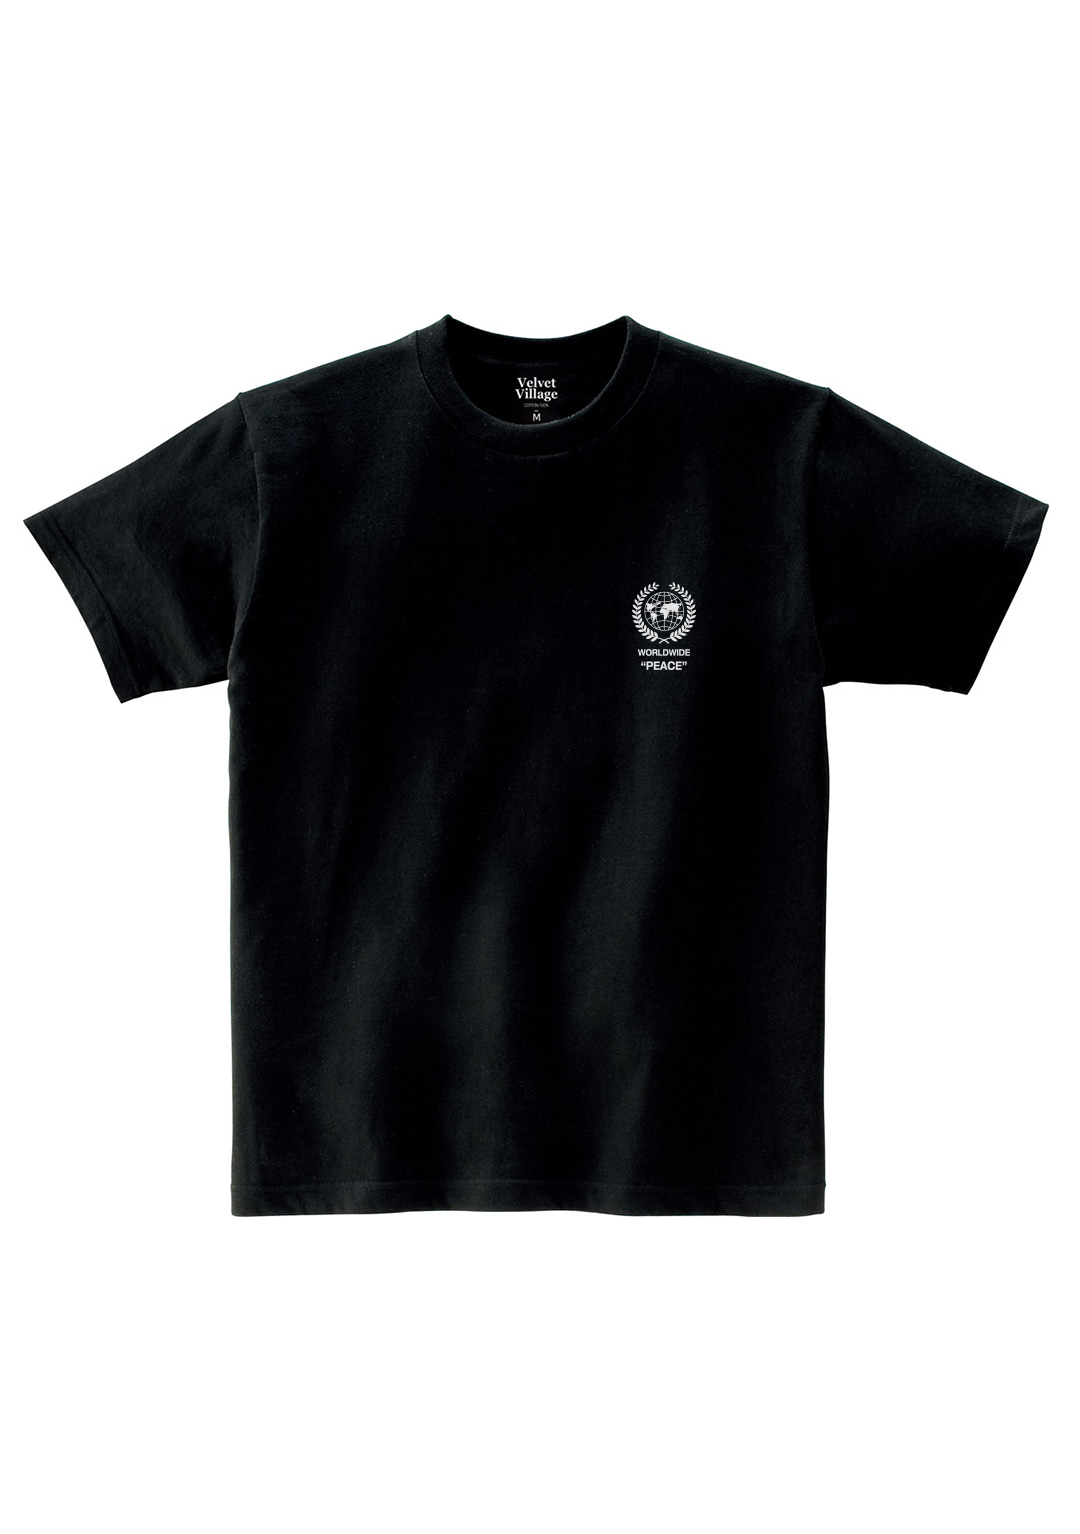 Worldwidepeace T-shirt (Black)